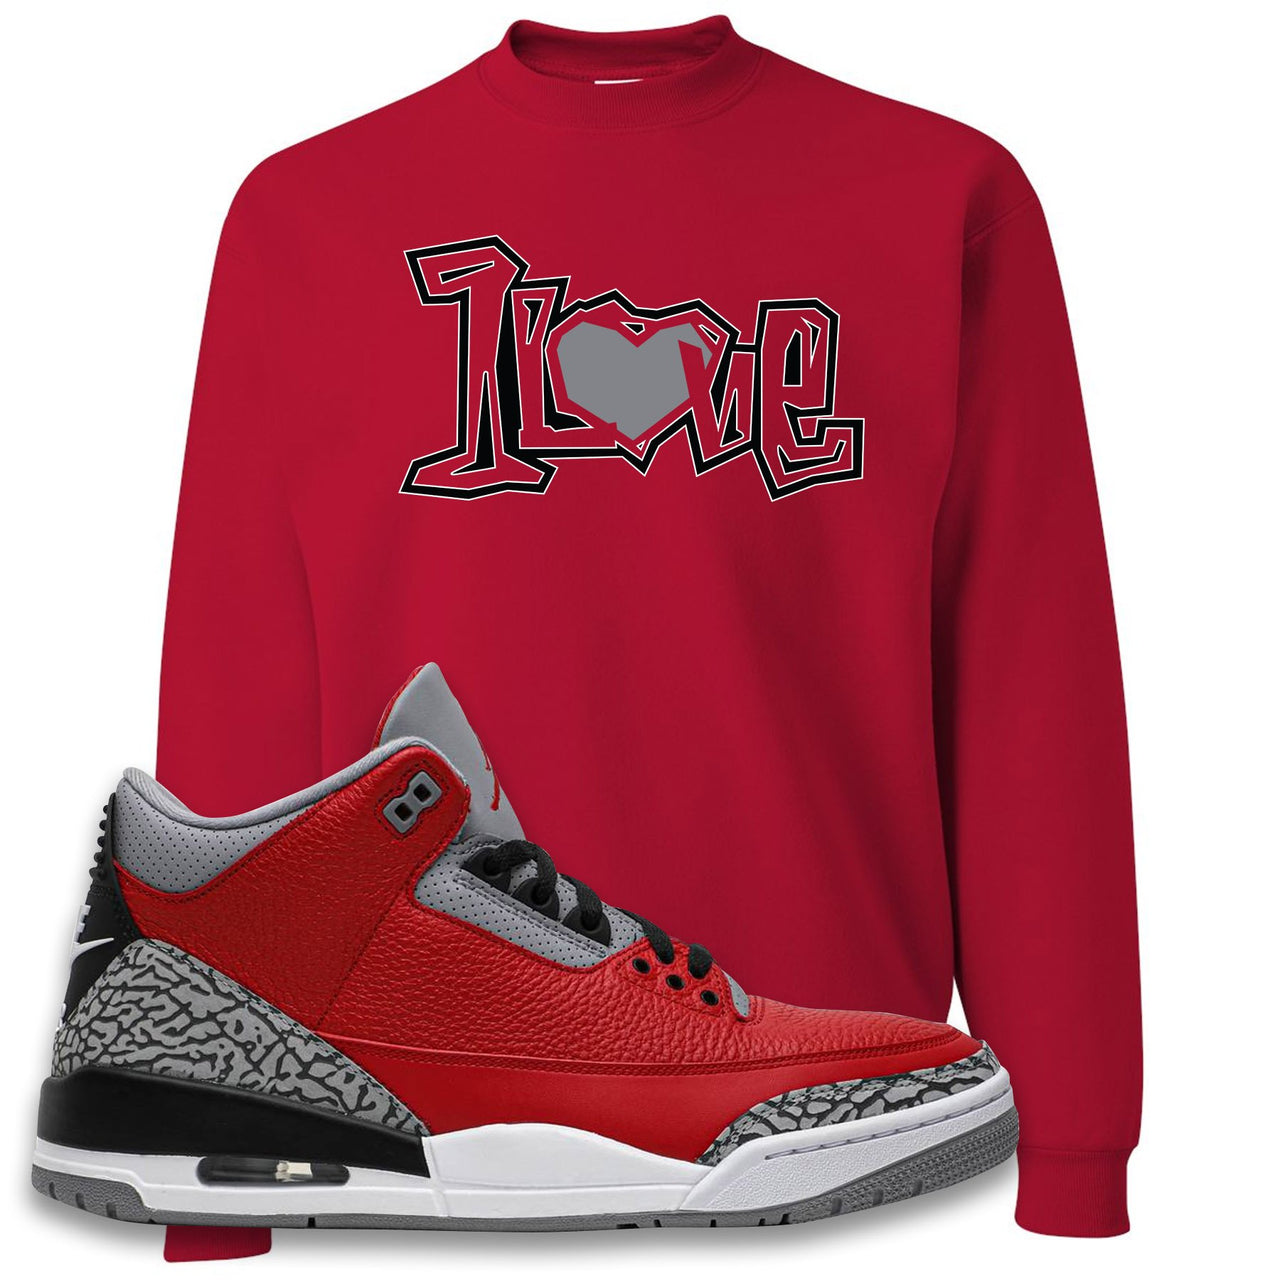 Chicago Exclusive Jordan 3 Red Cement Sneaker True Red Crewneck Sweatshirt | Crewneck to match Jordan 3 All Star Red Cement Shoes | 1 Love